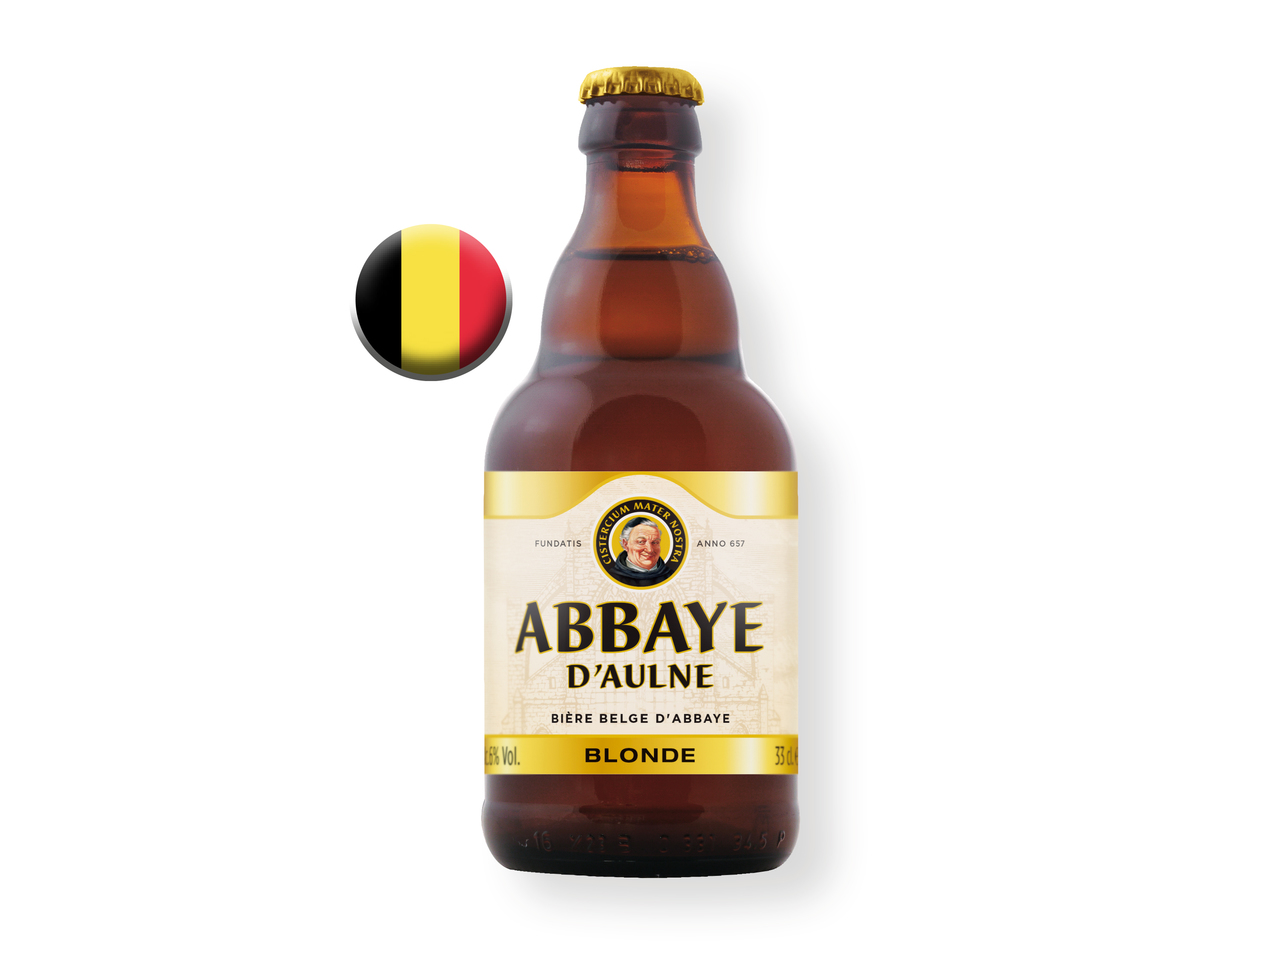 "Abbaye d'Aulne" Cerveza de abadía belga